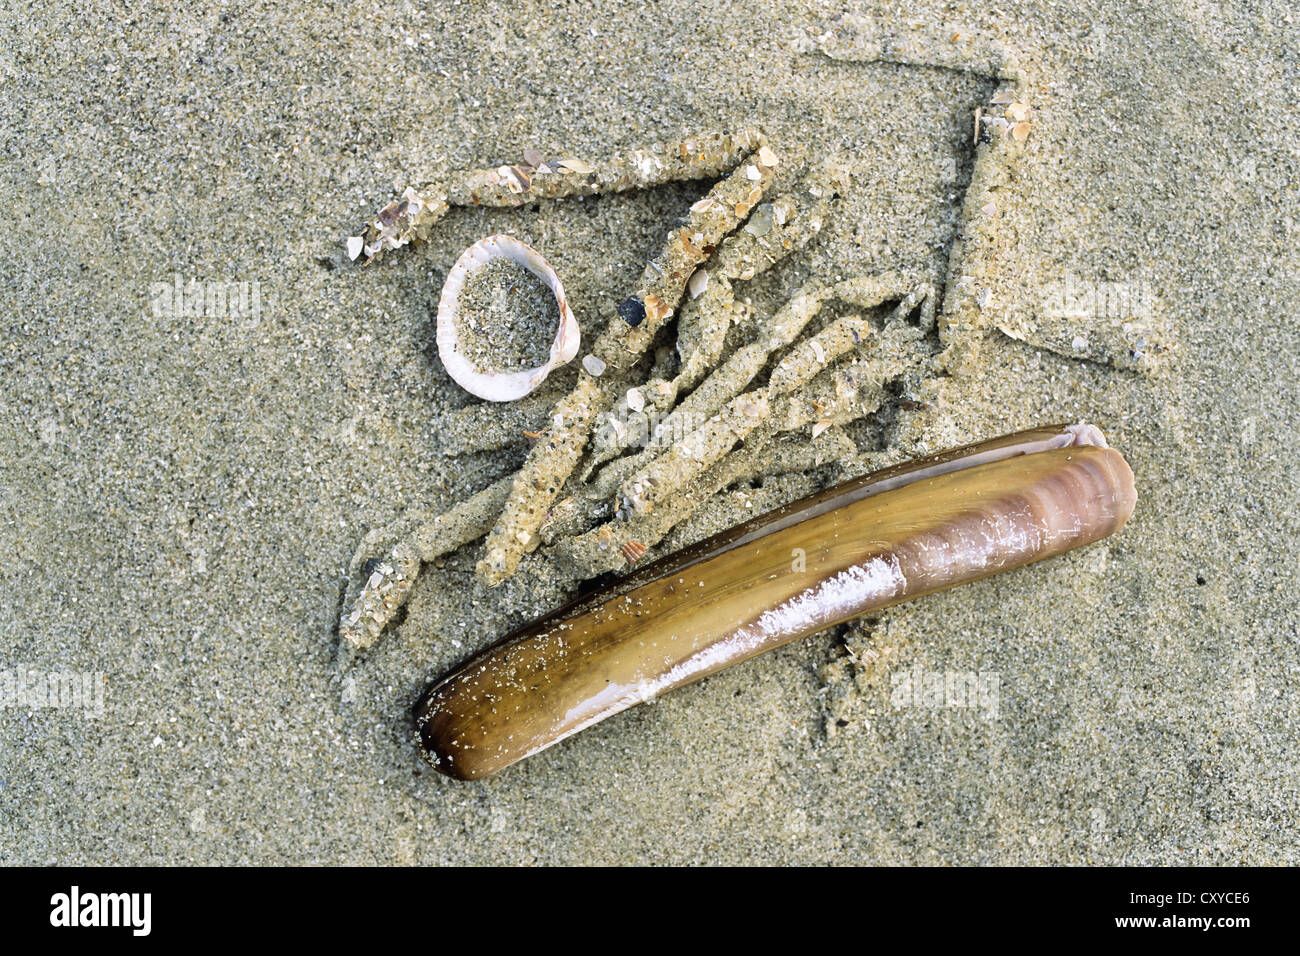 Mussels in mud flats, Cockle (Cardium edule), Sword Razor (Ensis ensis), sand tubes of Trumpet Worms (Pectinaria koreni) Stock Photo